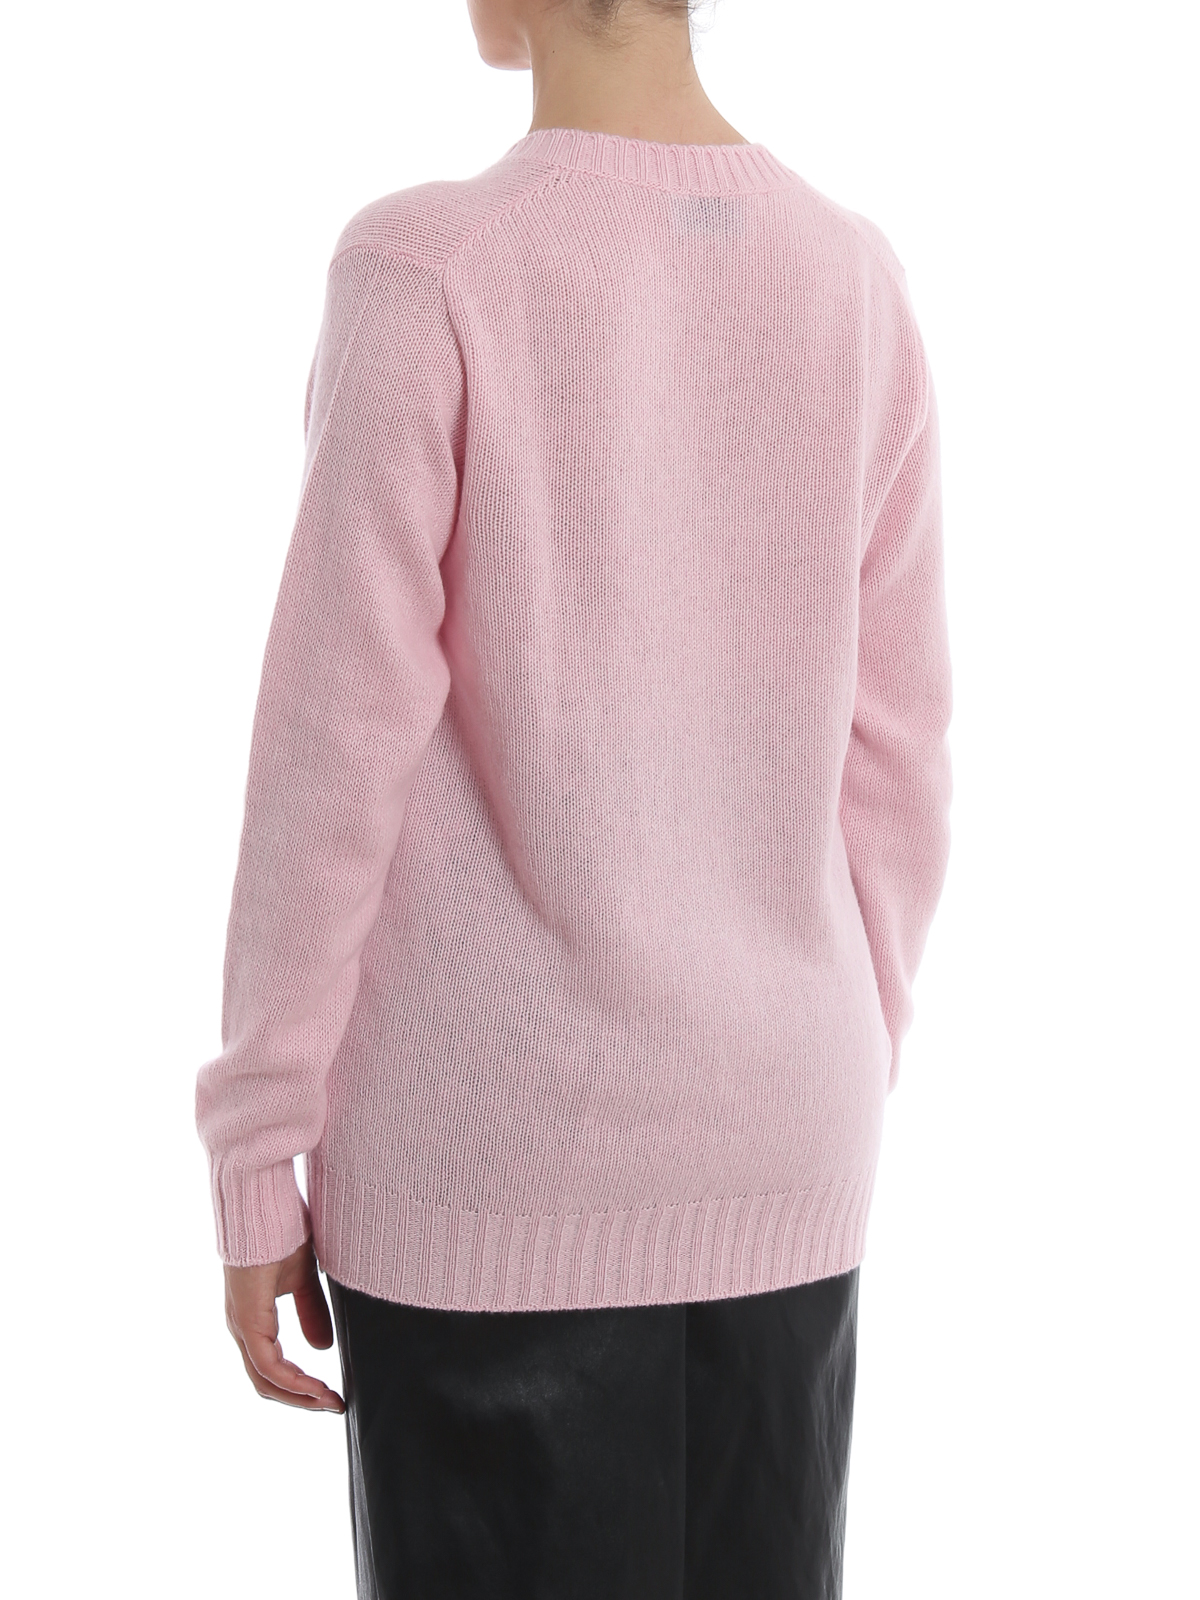 prada pink sweater